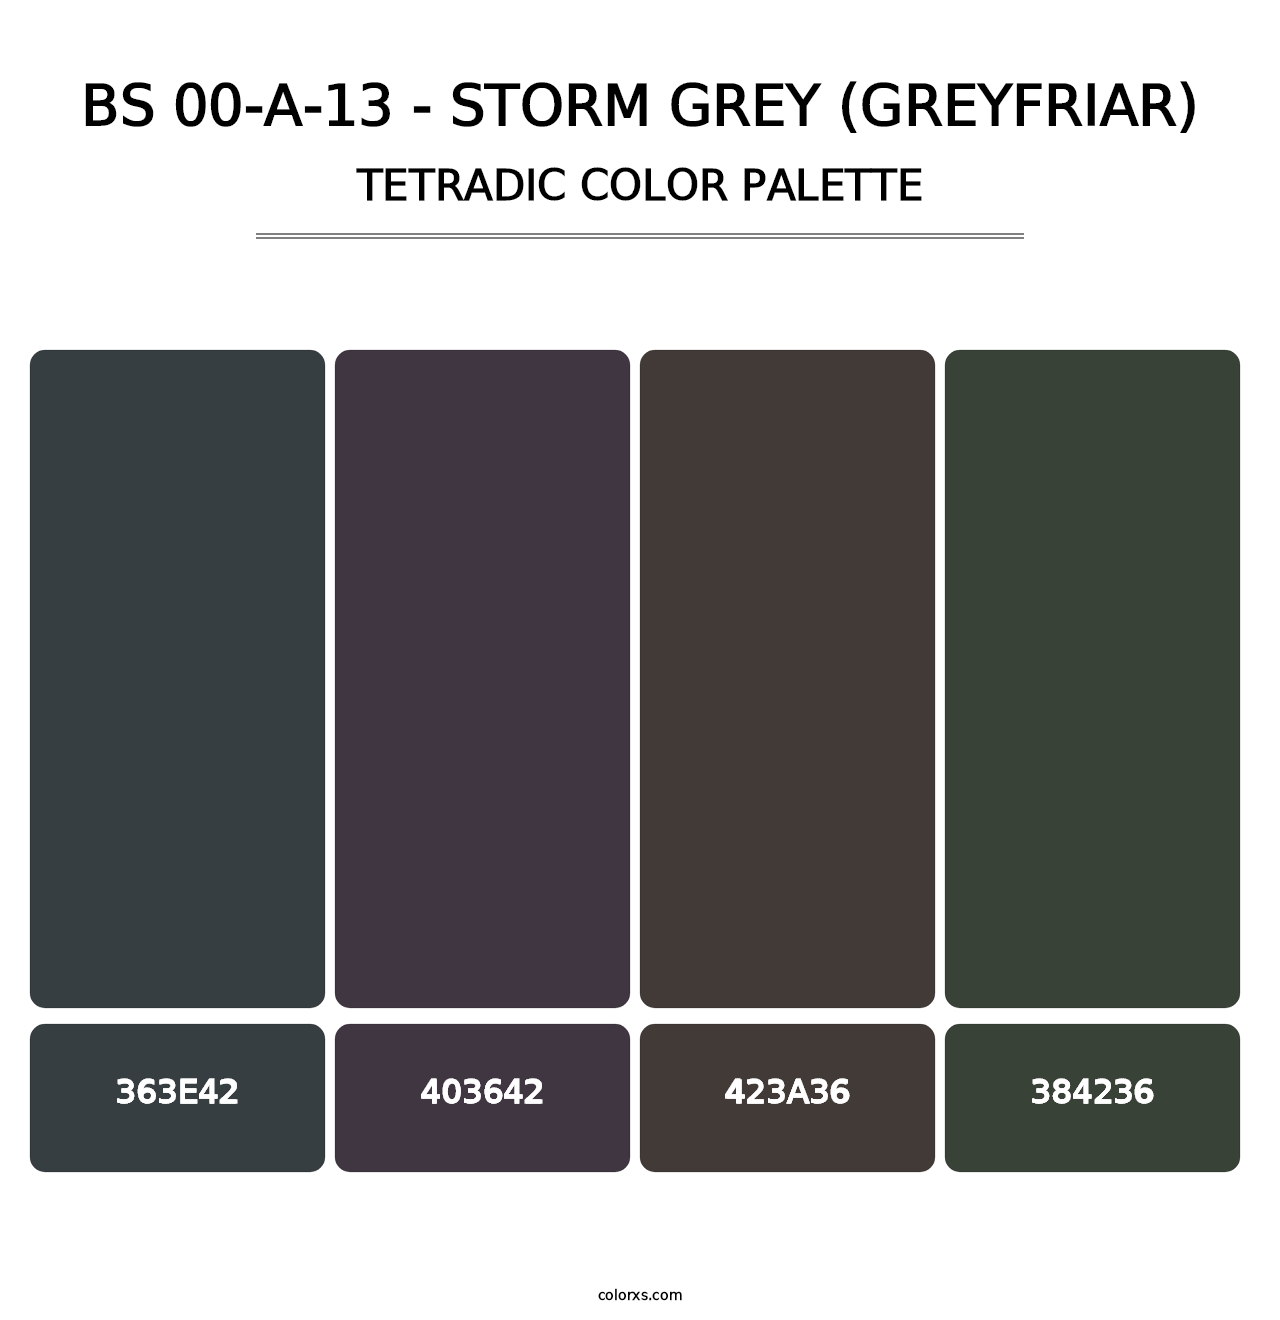 BS 00-A-13 - Storm Grey (Greyfriar) - Tetradic Color Palette